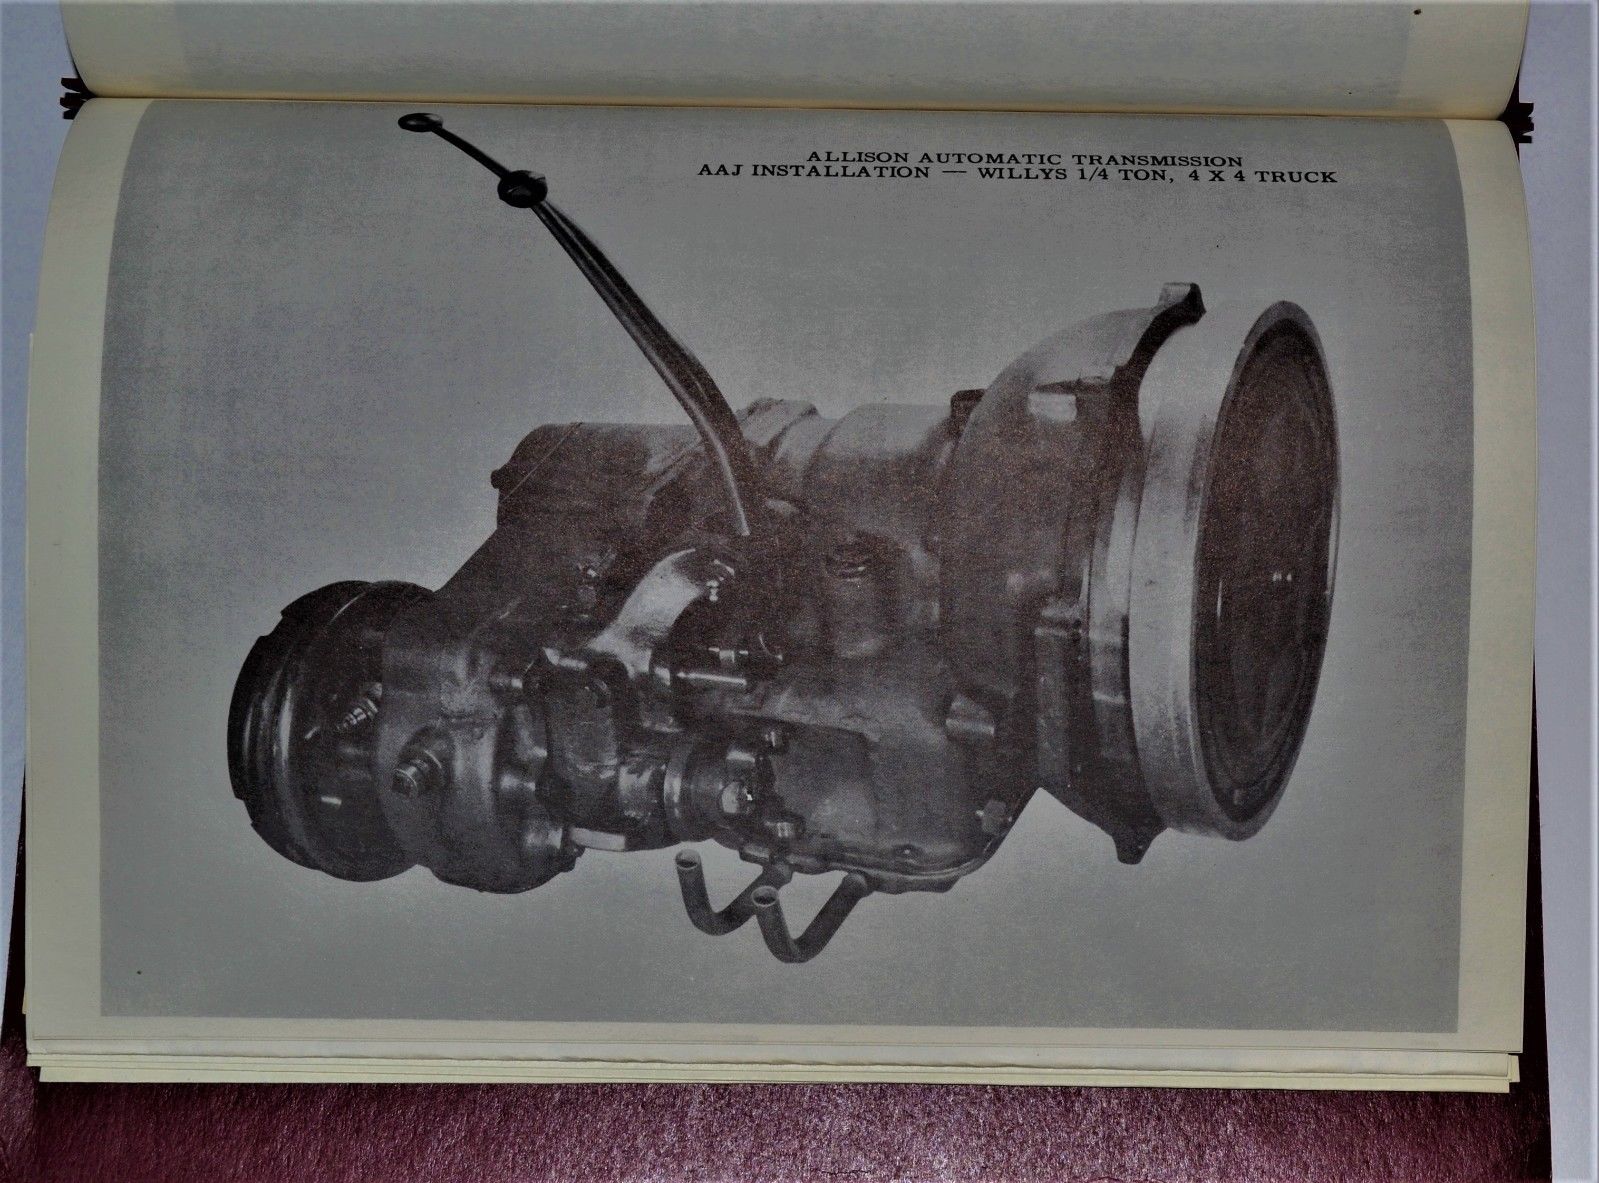 1952-m38a1-transmission-document6